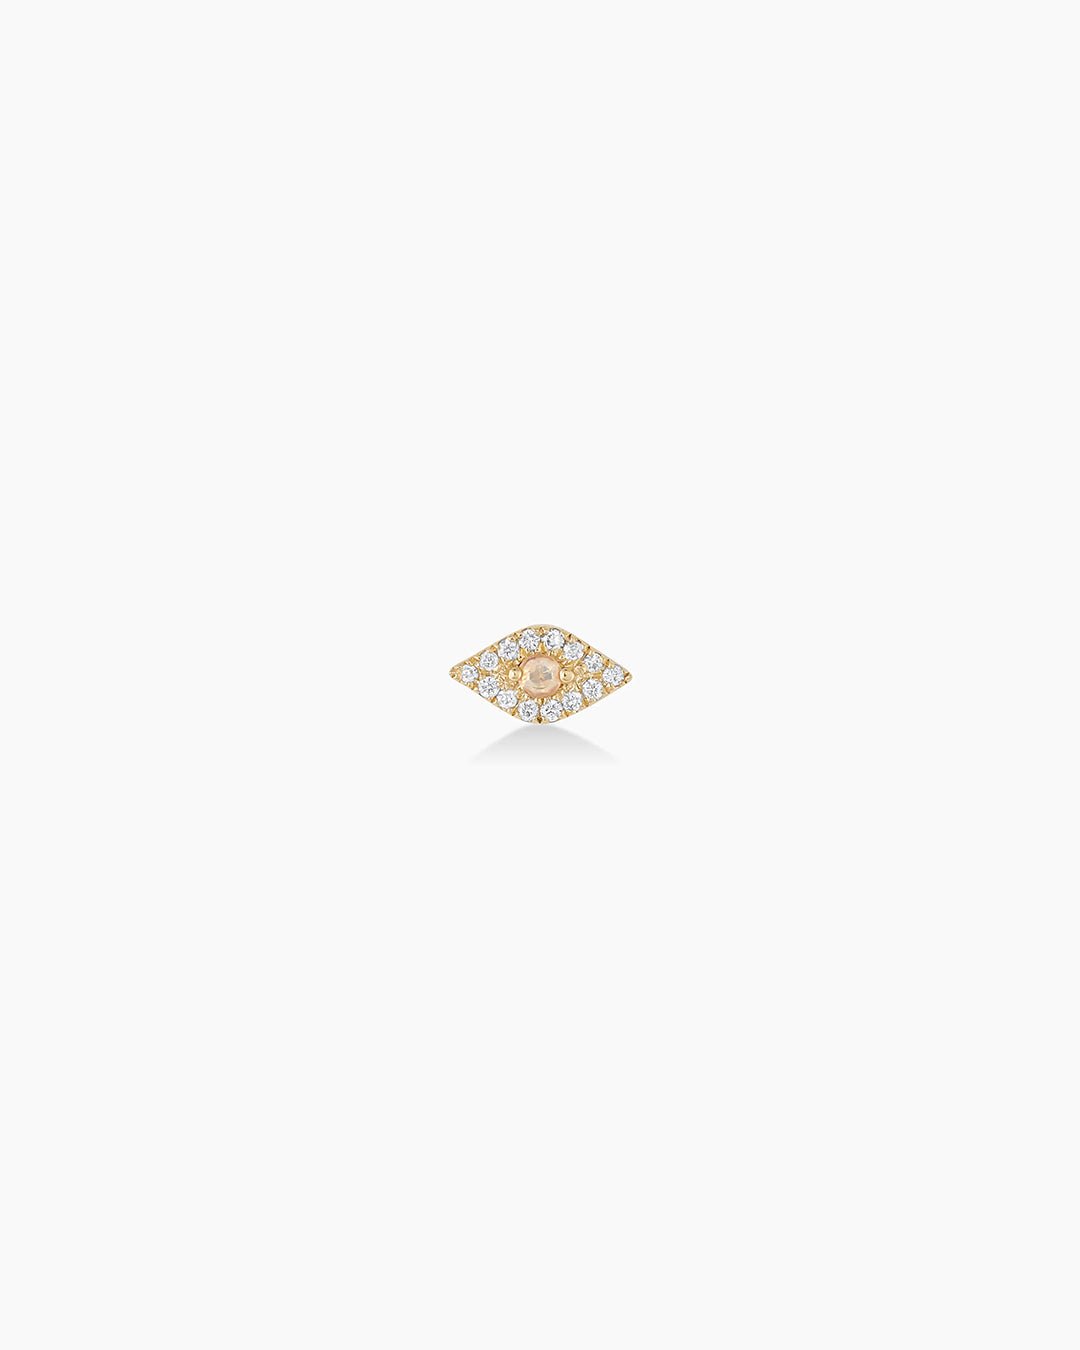 DiamondEvil Eye StudsDiamond and Opal earrings || option::14k Solid Gold, Single